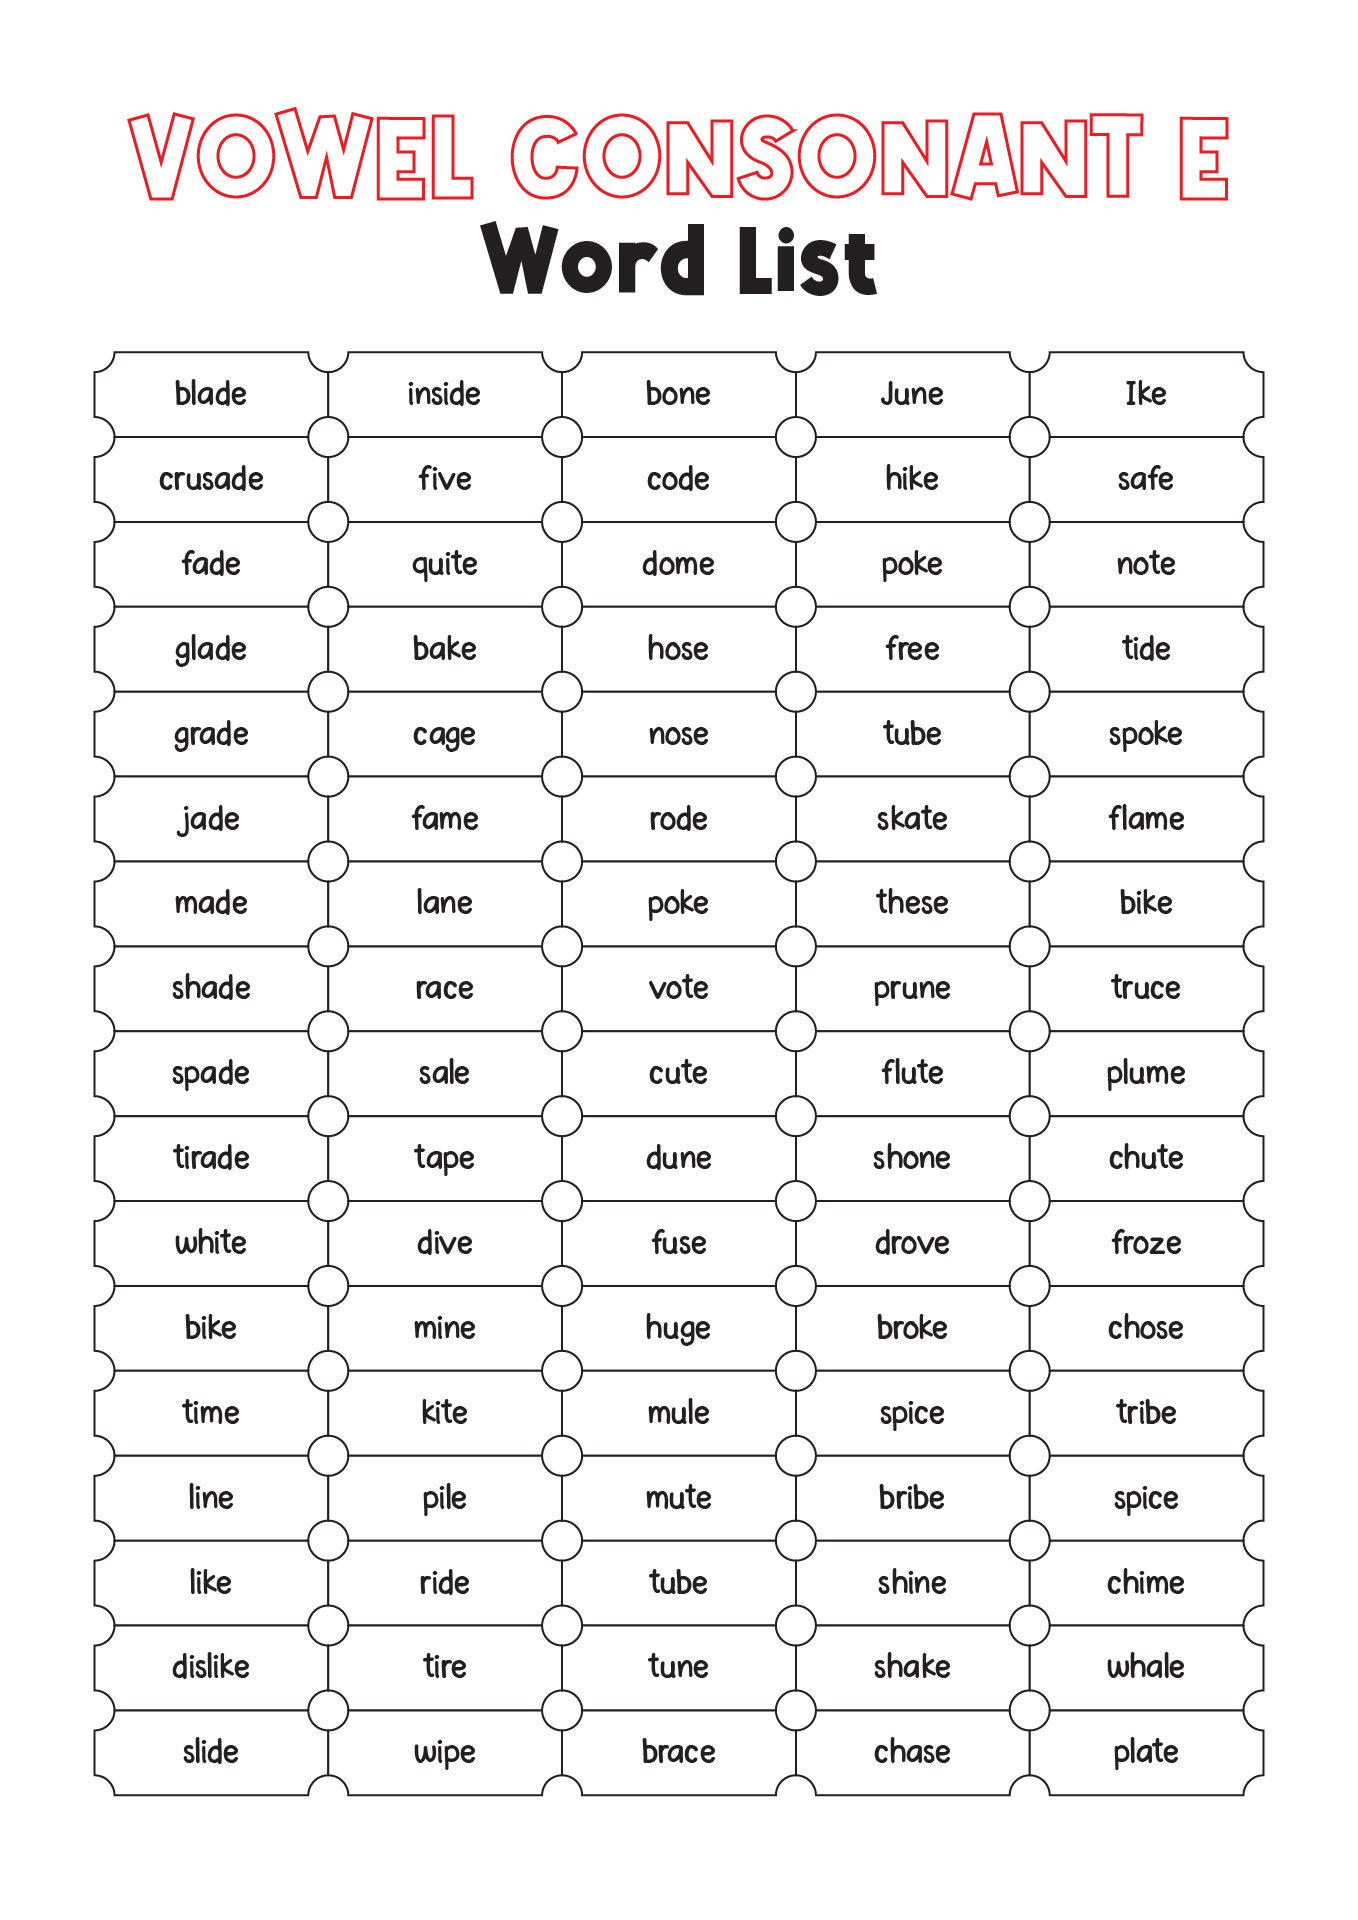 Vowel Consonant E Word List